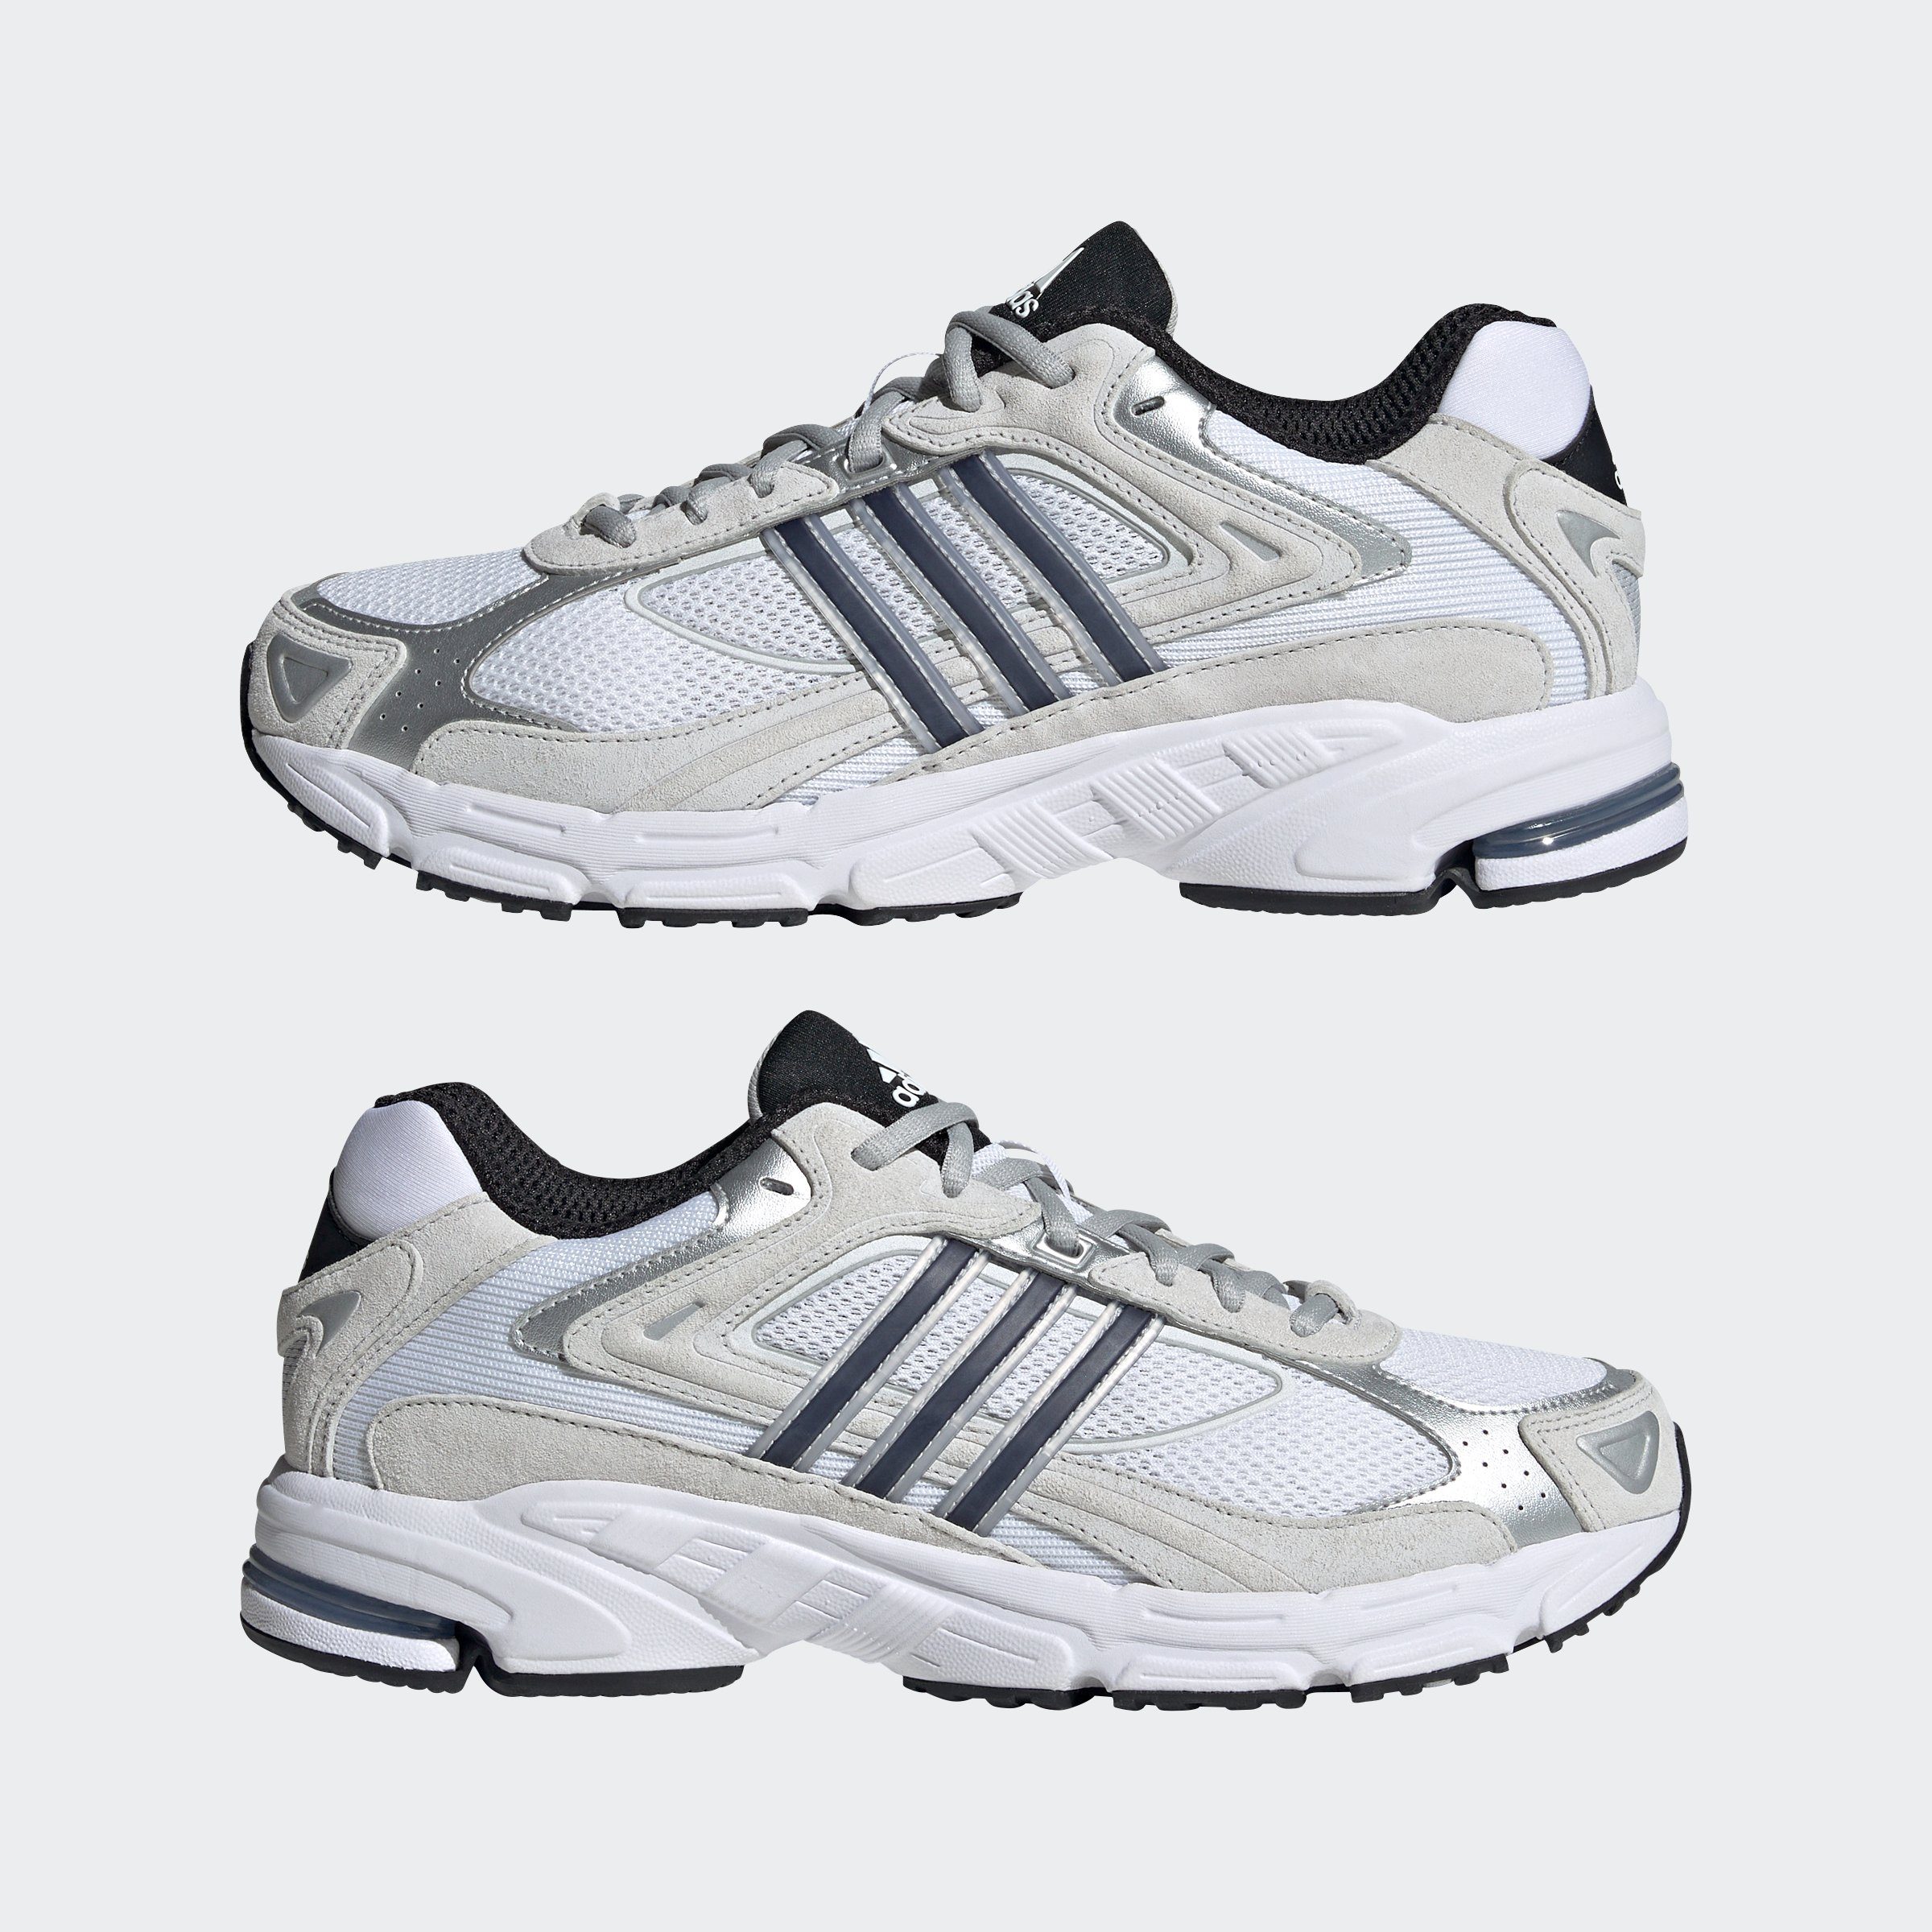 / Two RESPONSE Grey / adidas Black Originals Core White Cloud CL Sneaker